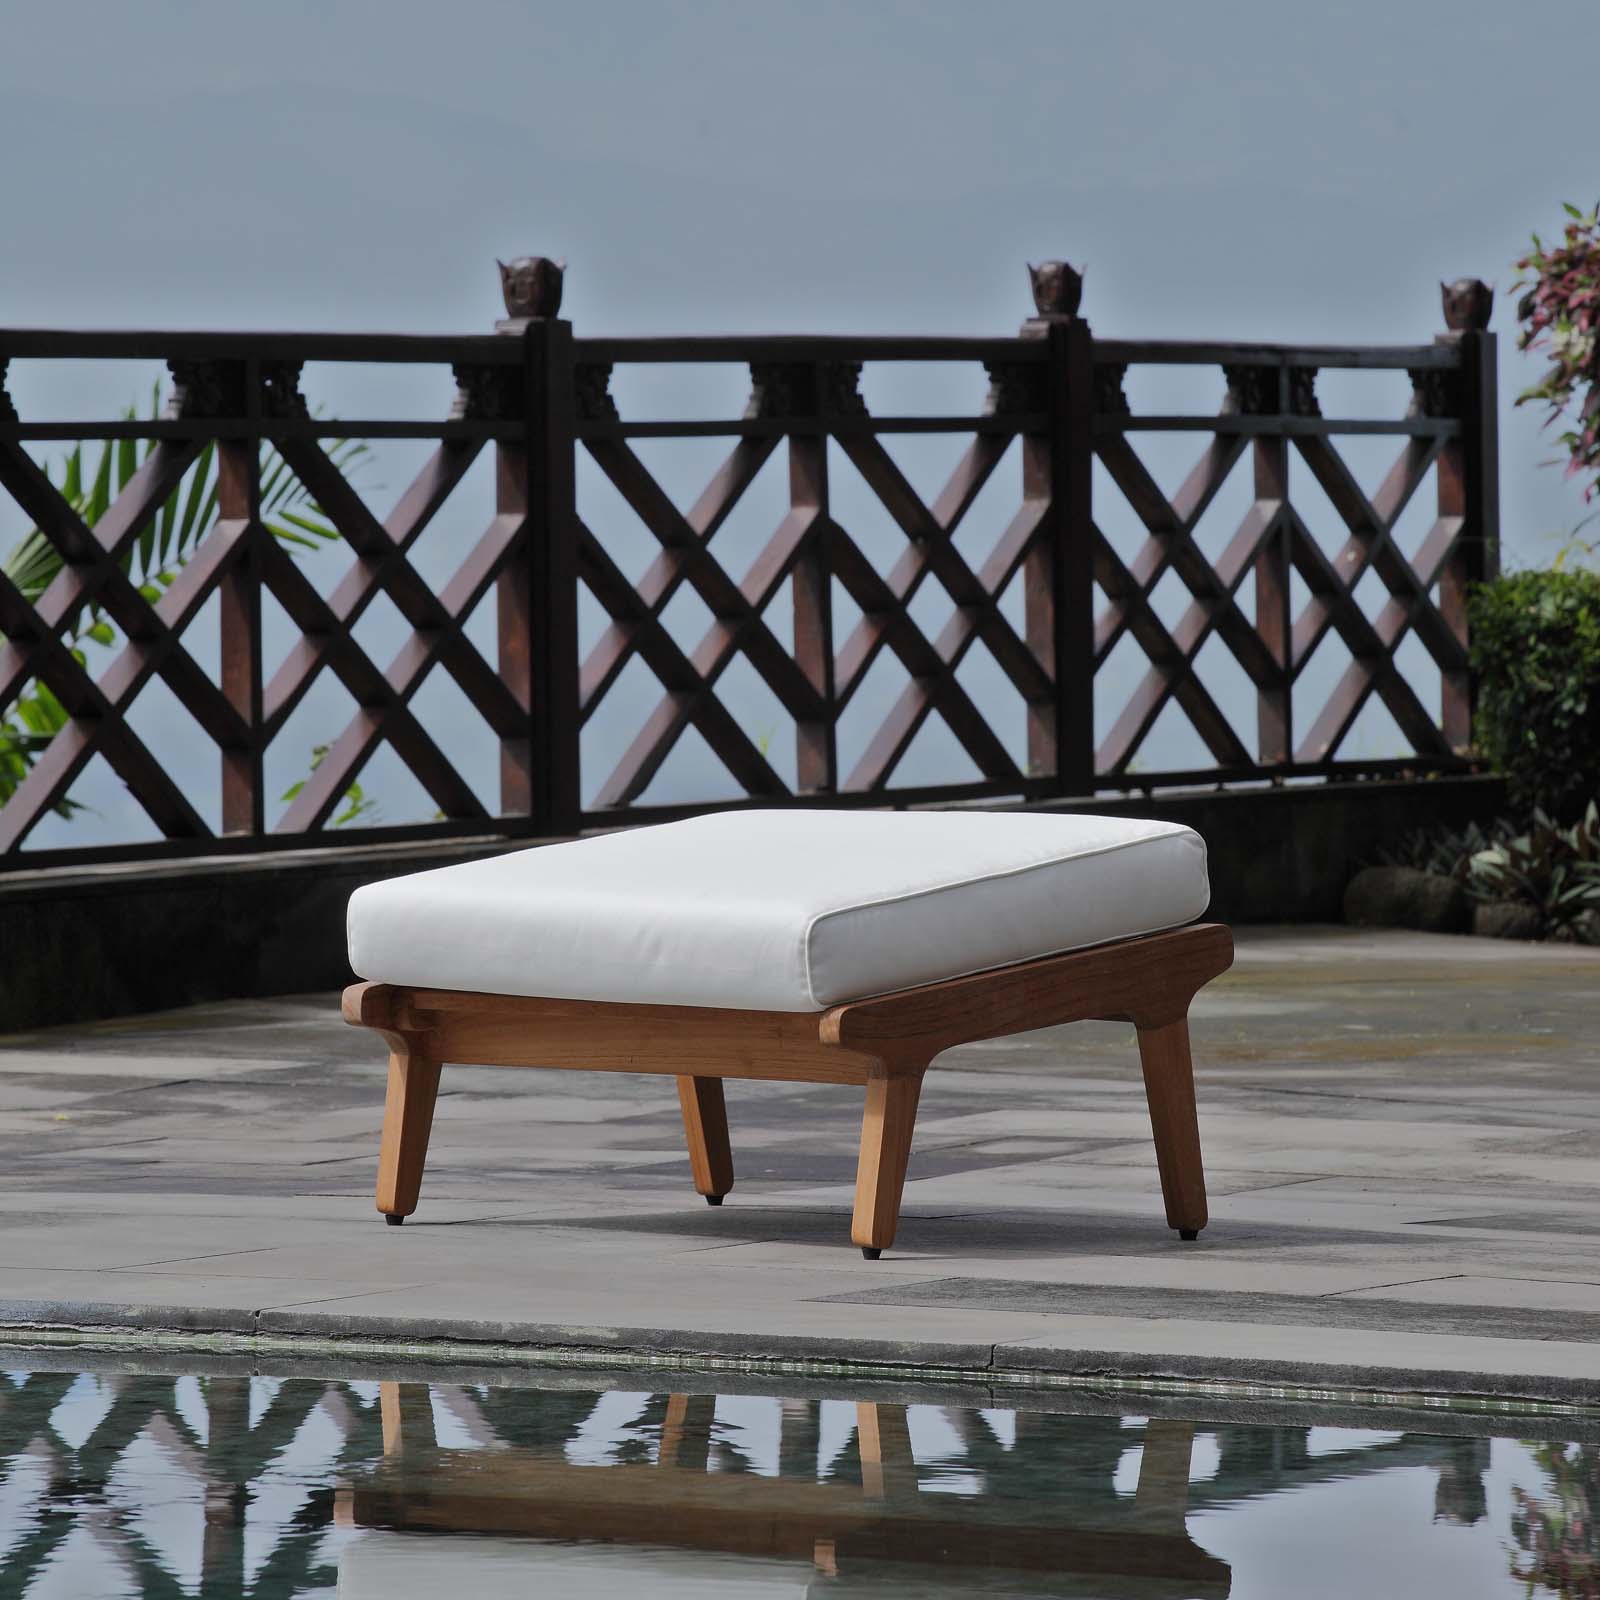 Modern Contemporary Urban Design Outdoor Patio Balcony Garden Furniture Lounge Chair Ottoman, Wood, White Natural - image 2 of 6